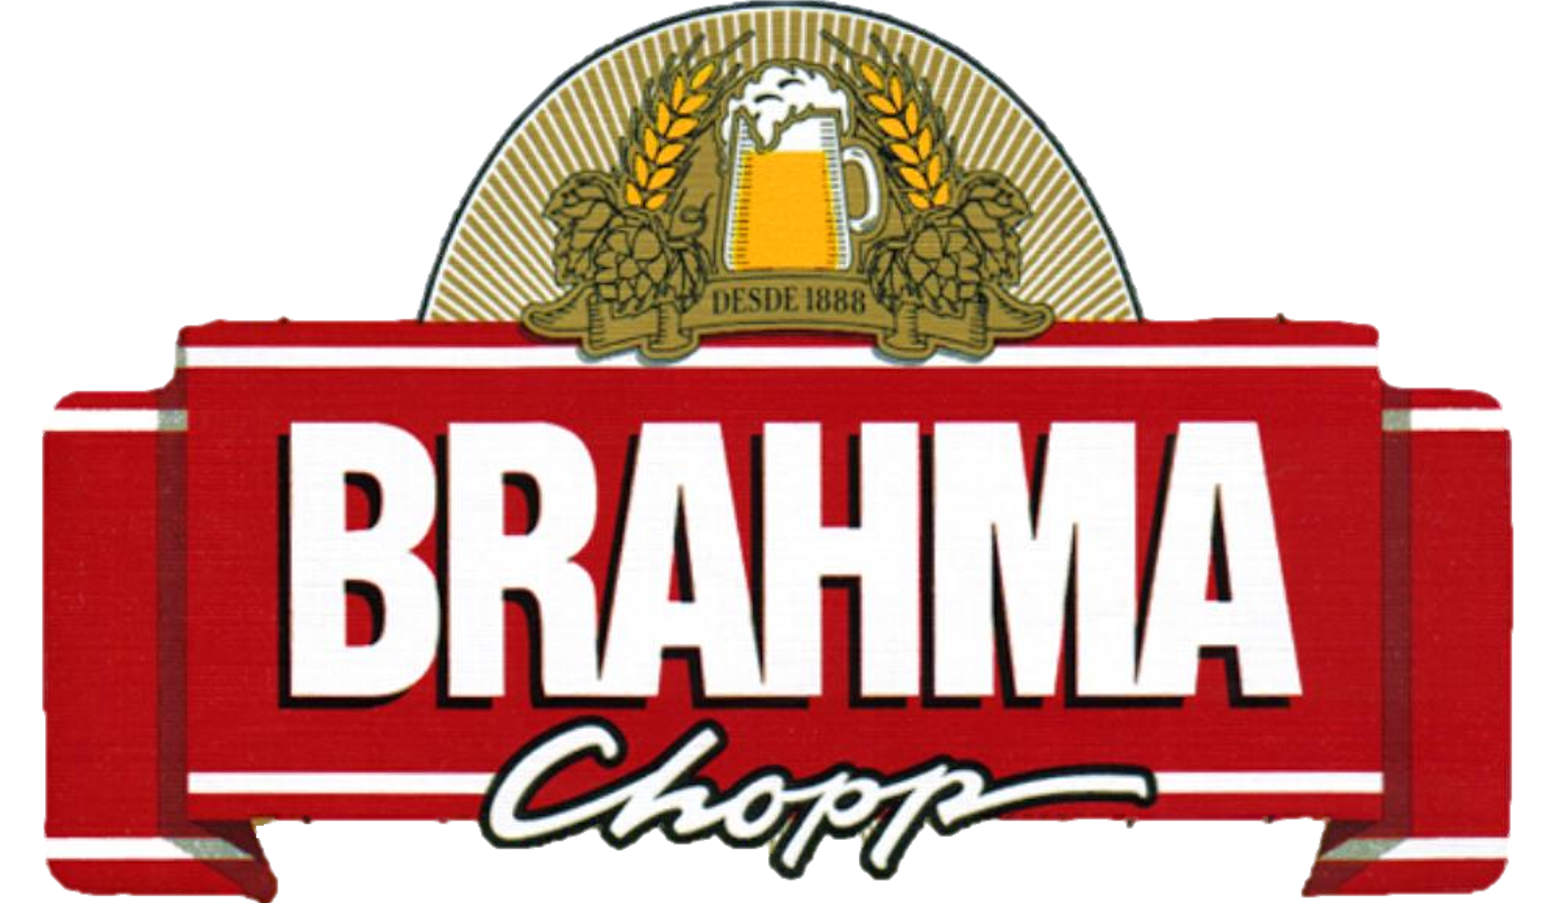 Fort Worth Brahmas Logo PNG Transparent & SVG Vector - Freebie Supply